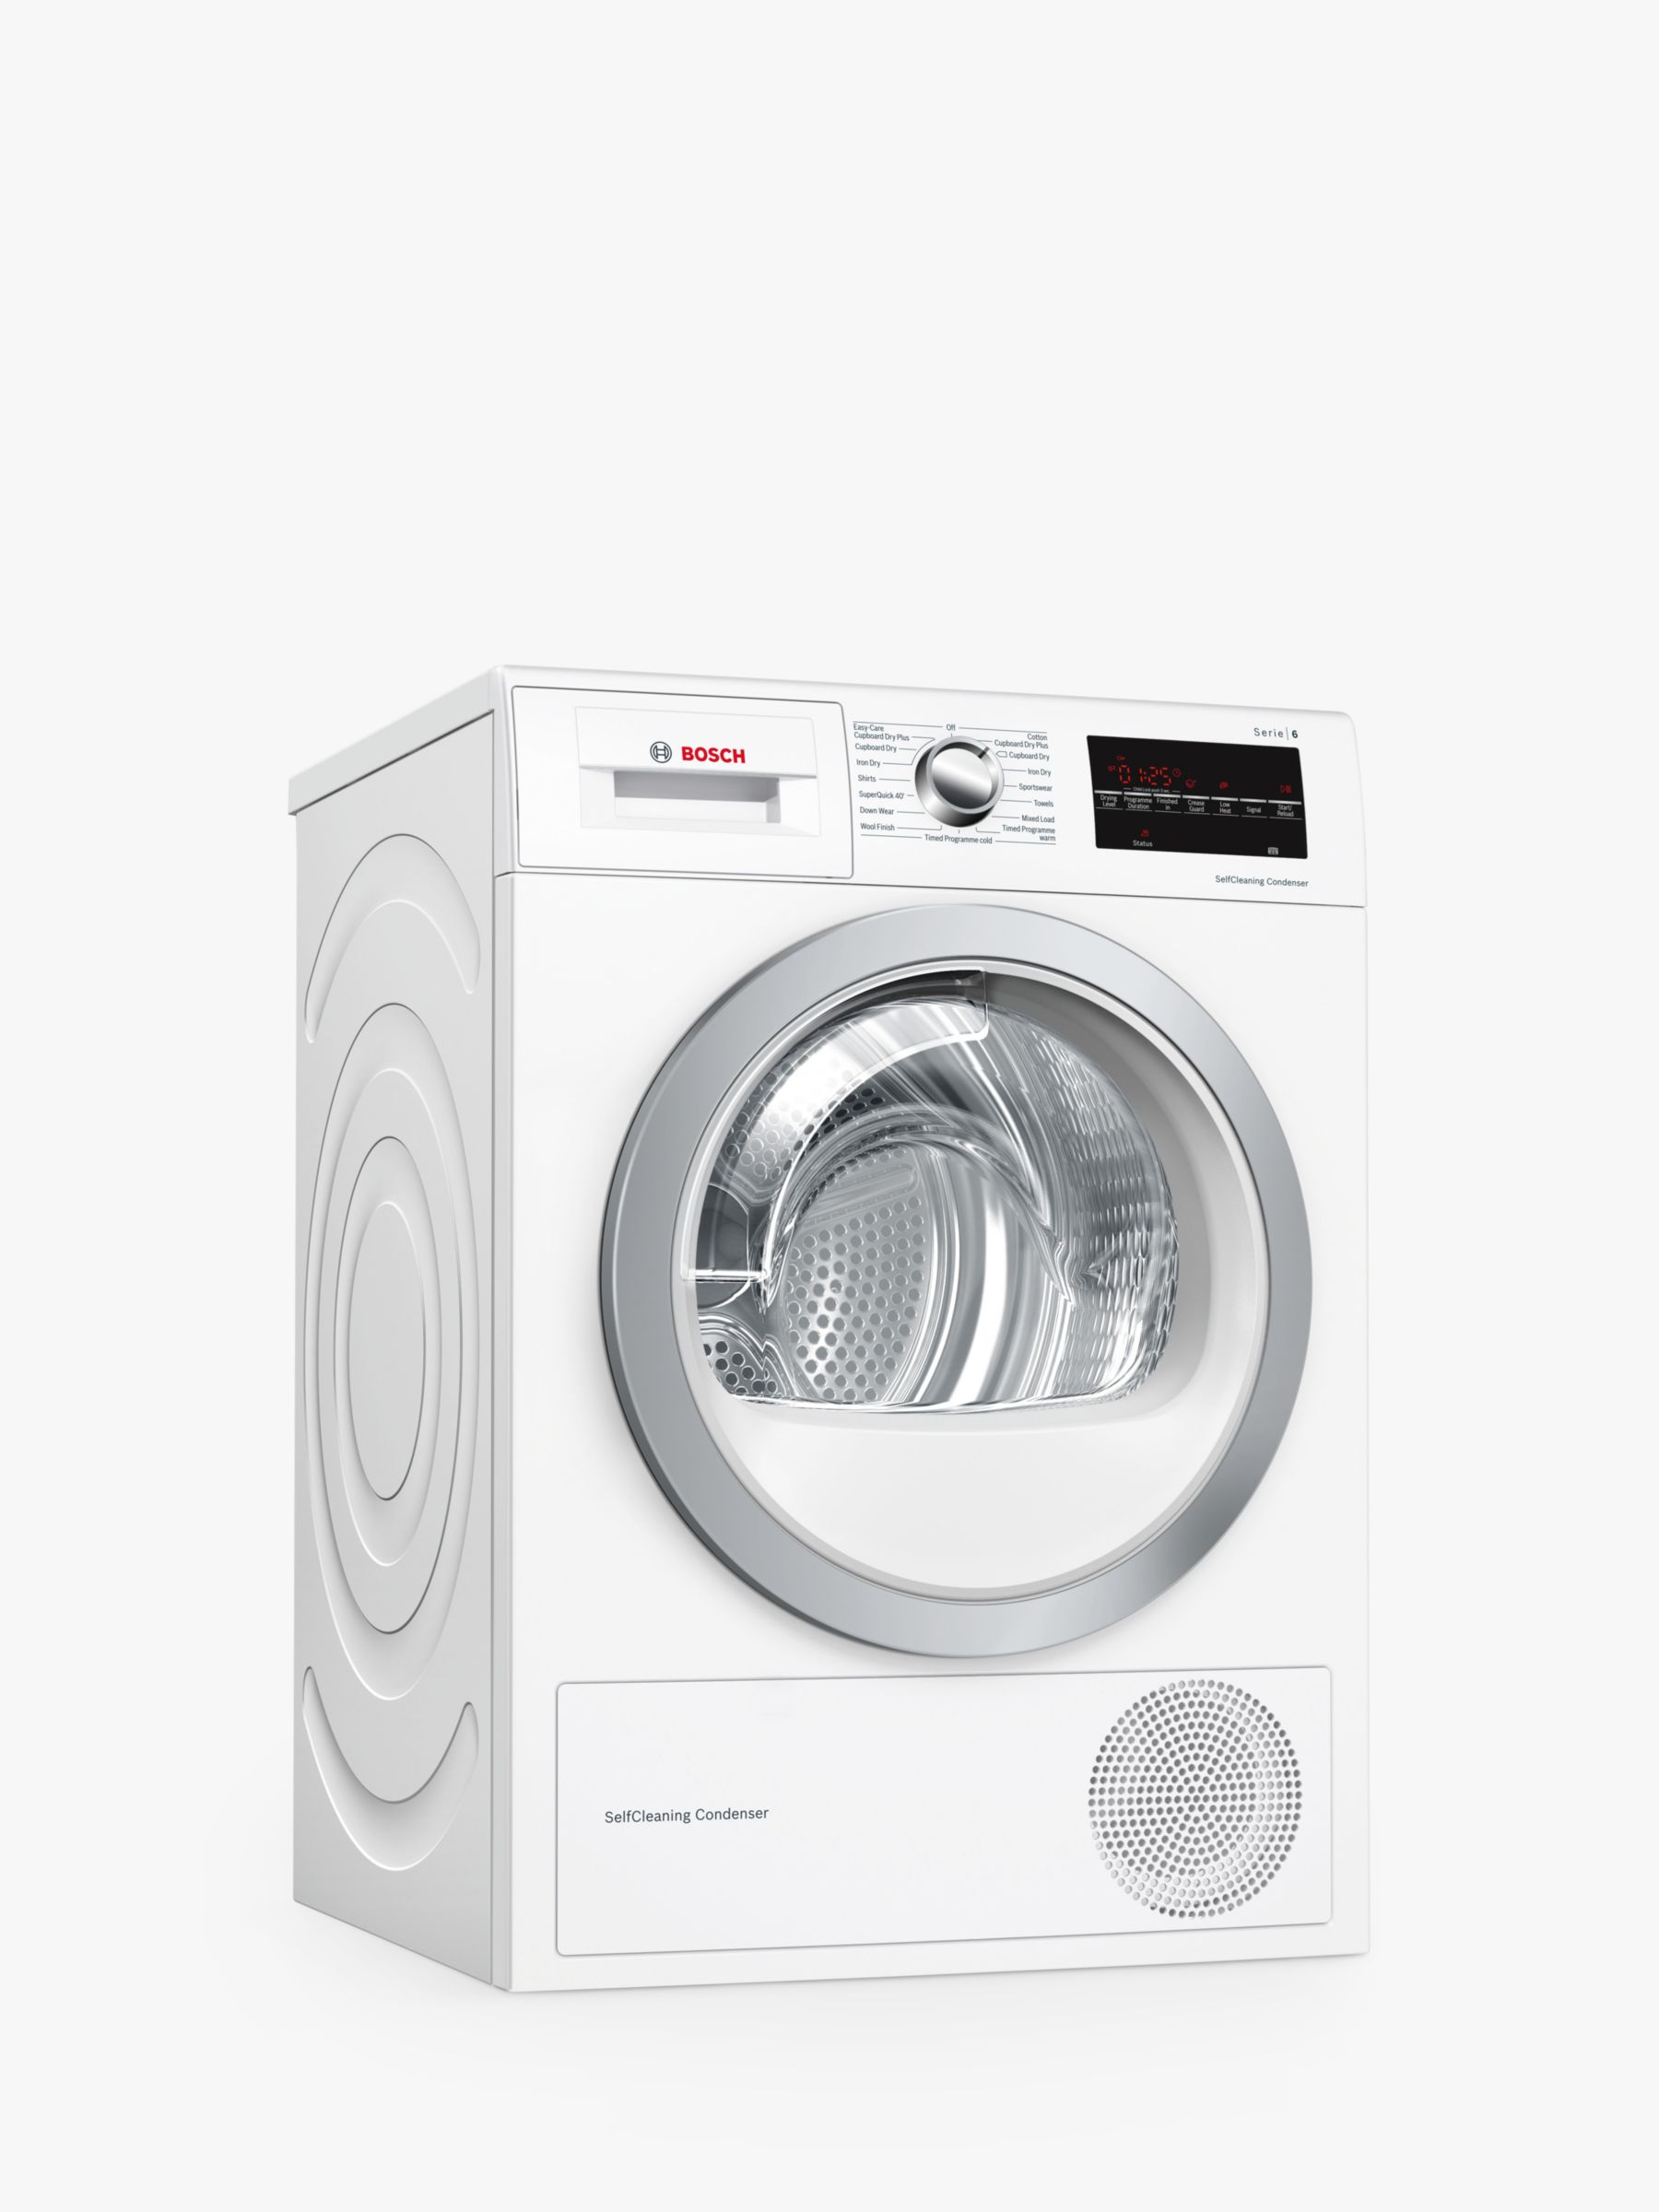 Bosch Series 6 Washing Machine Compact Washing Machines 2020